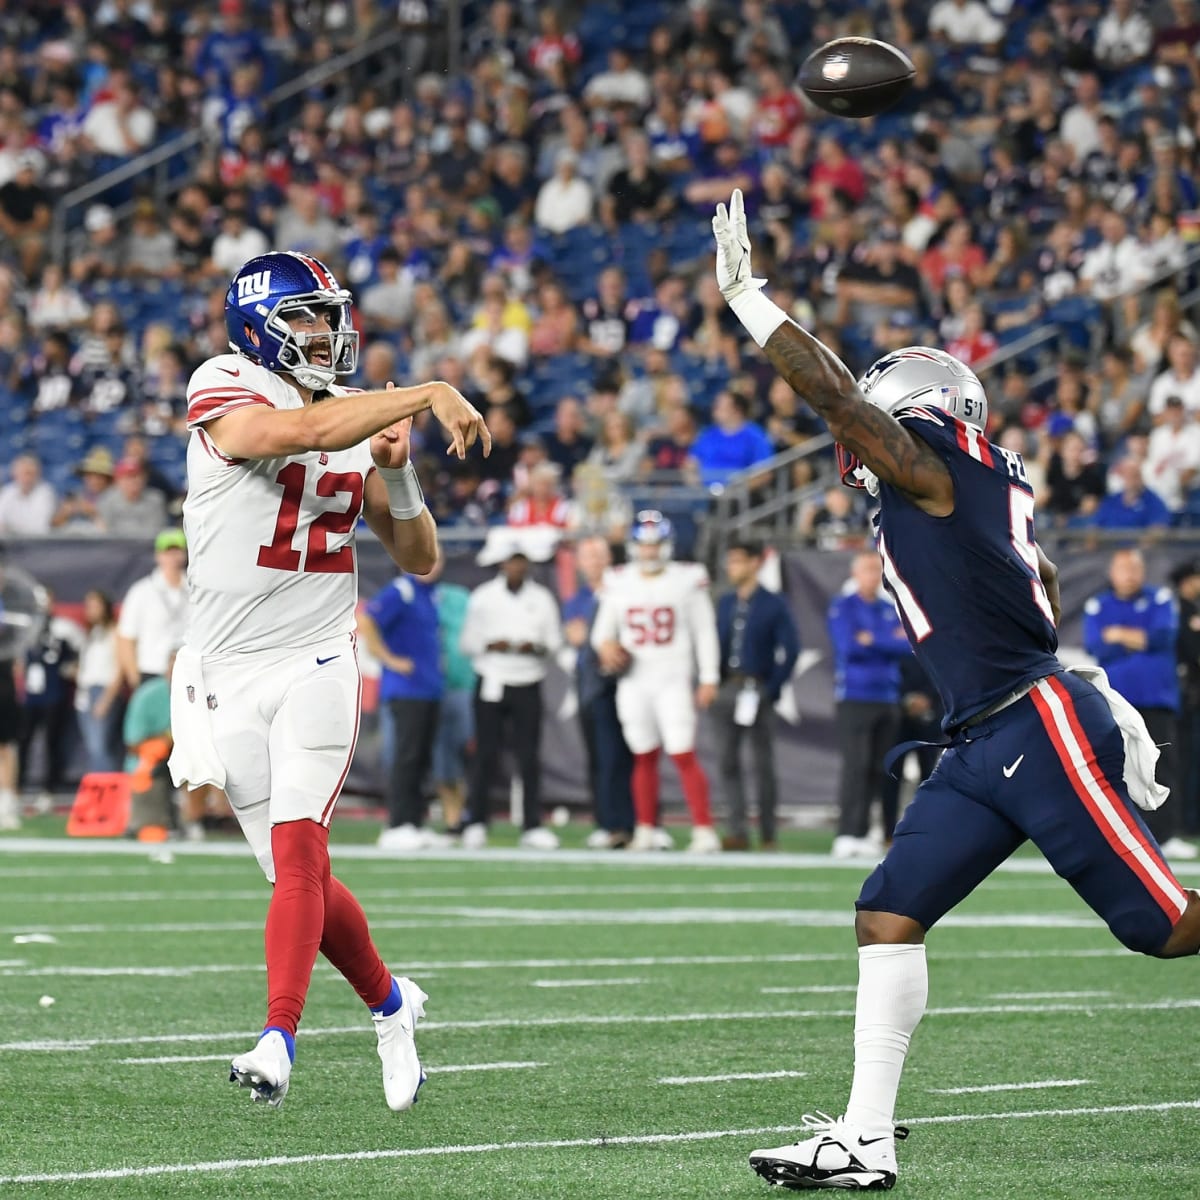 Giants beat Patriots in final play of preseason game